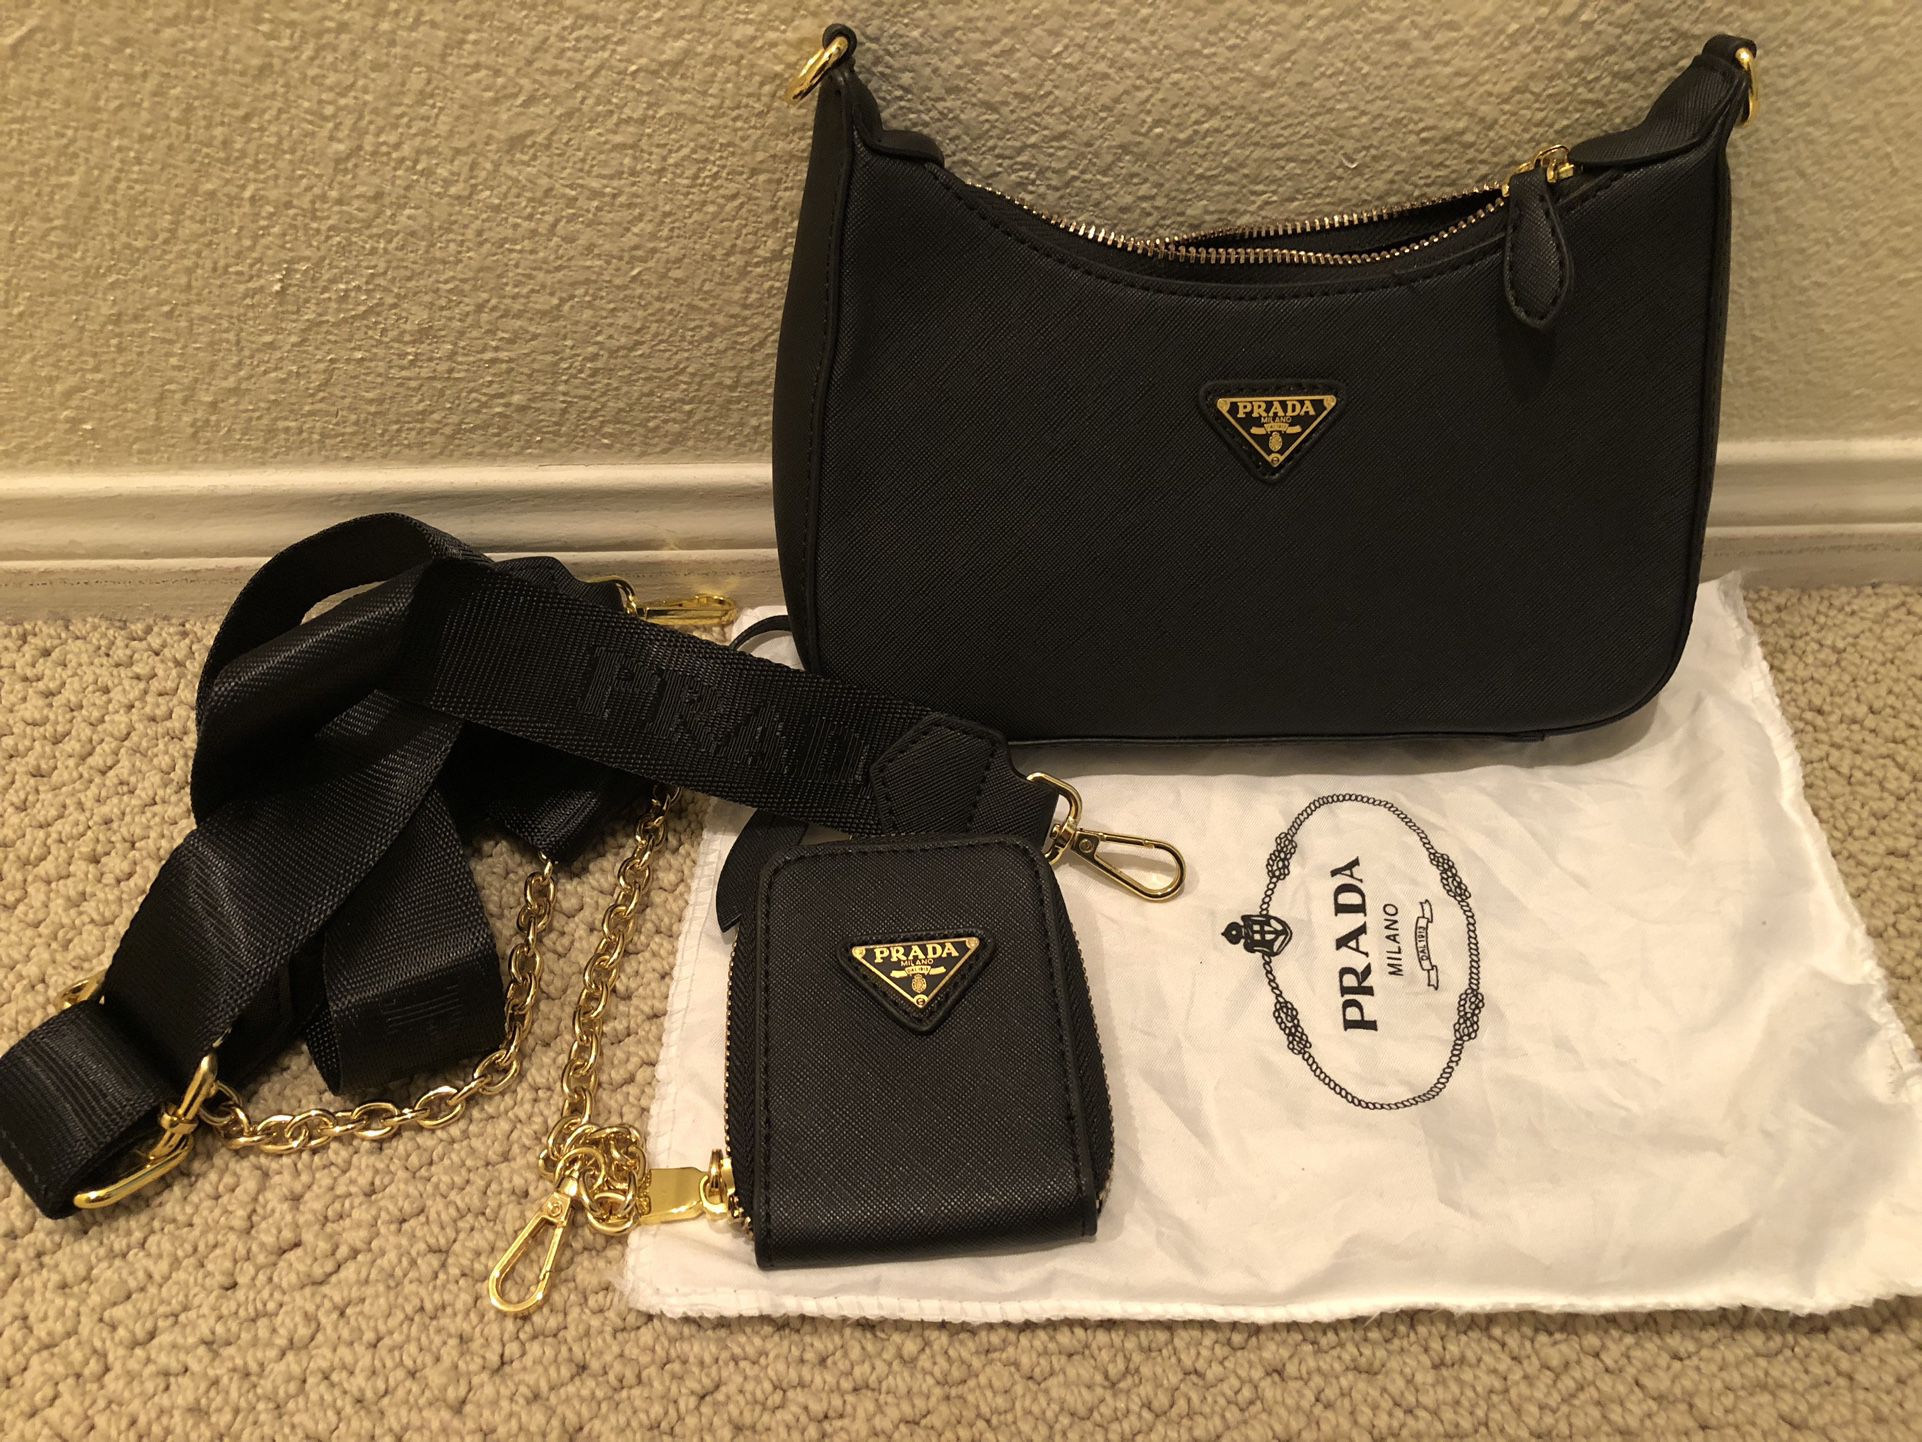 Prada Re-Edition 2005 leather bag black gold 